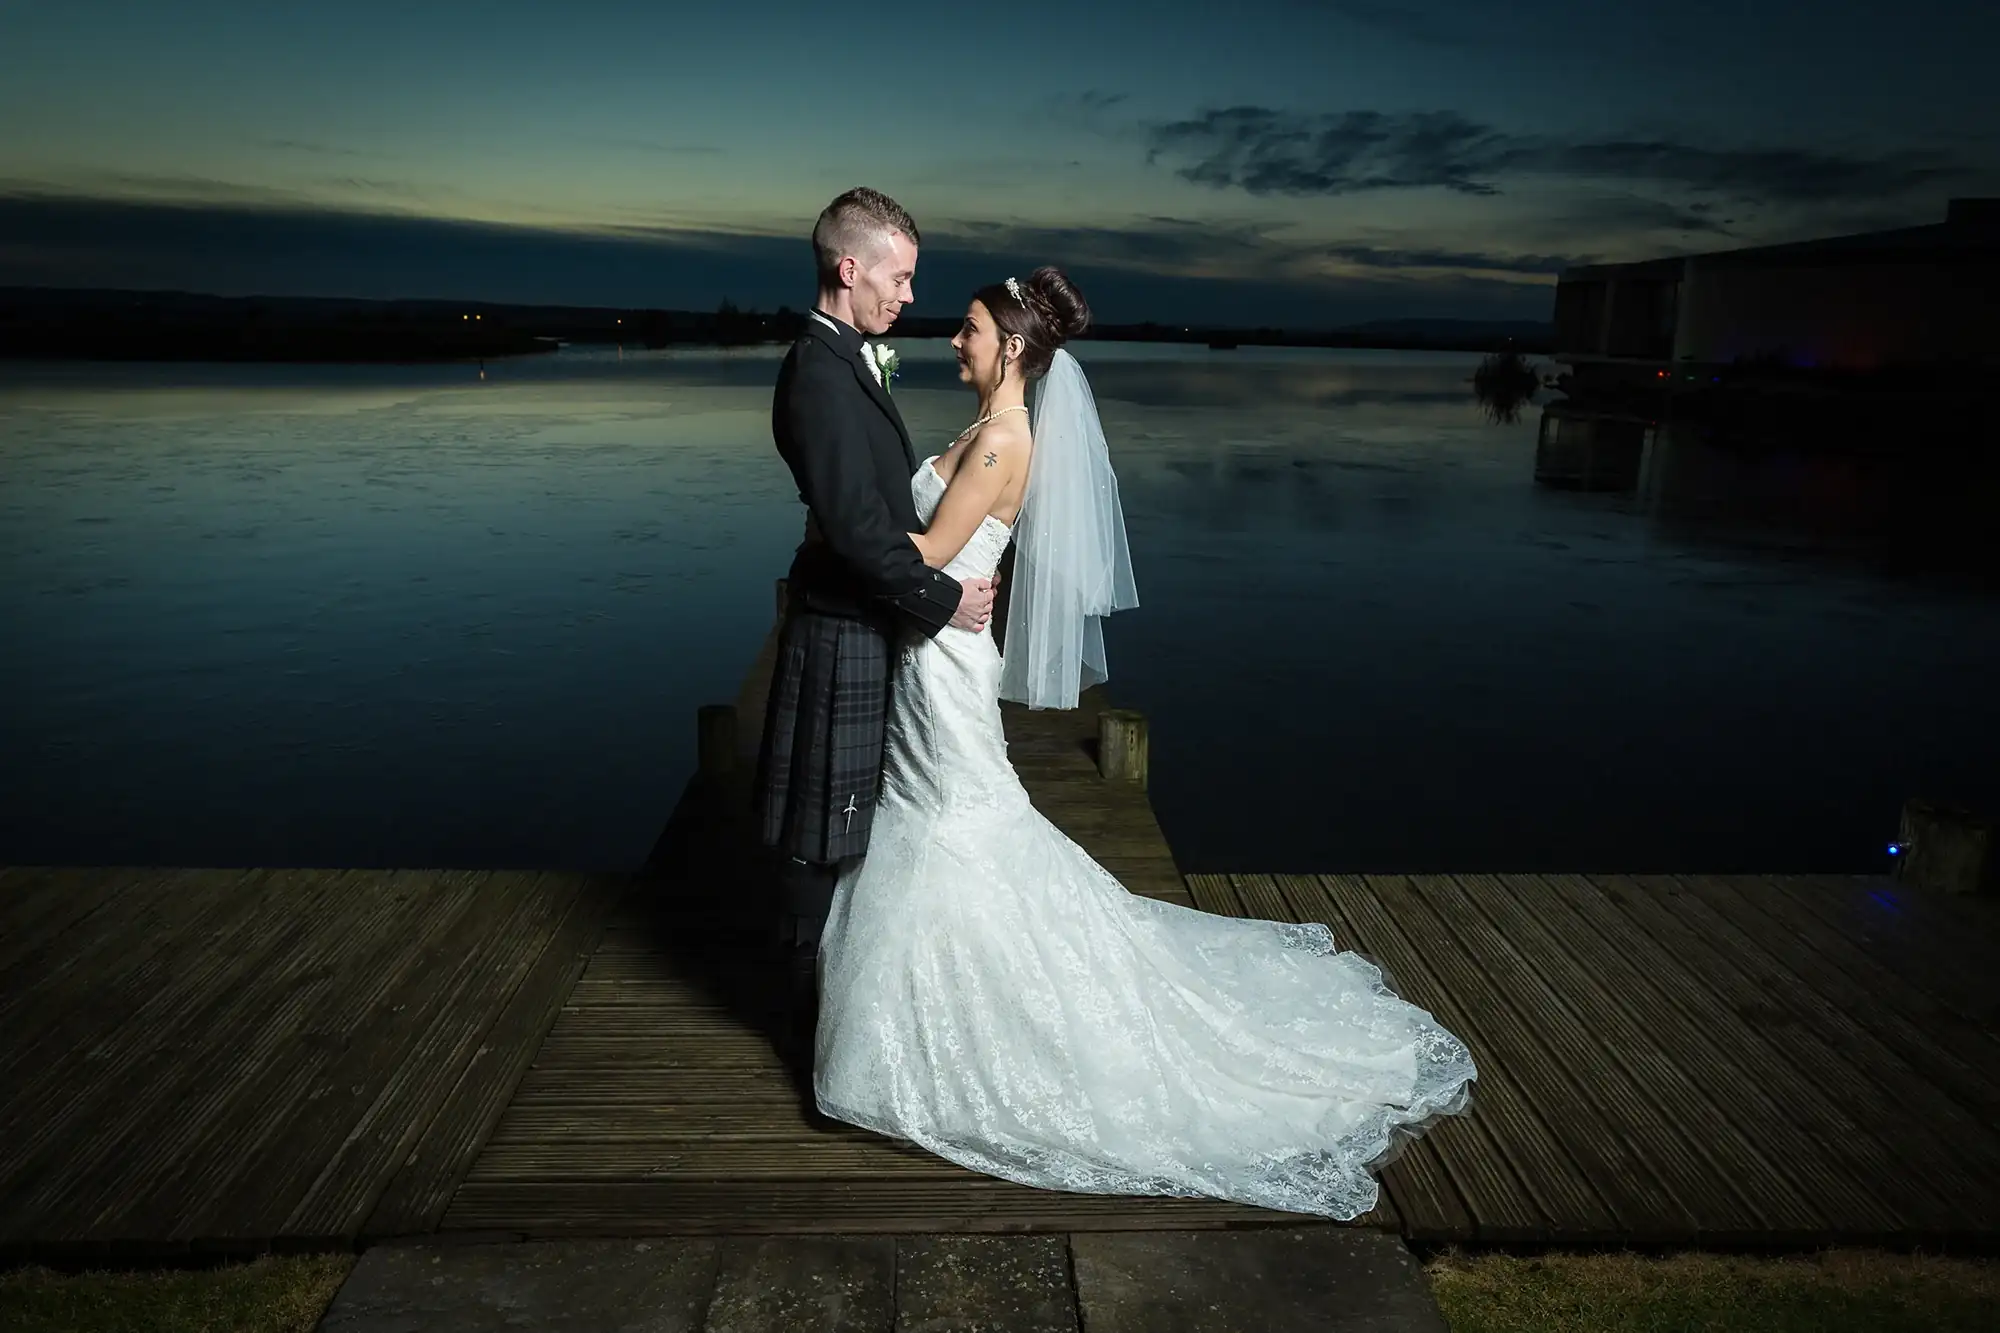 A bride and groom embrace on a lakeside dock at dusk, their figures illuminated against a twilight sky.